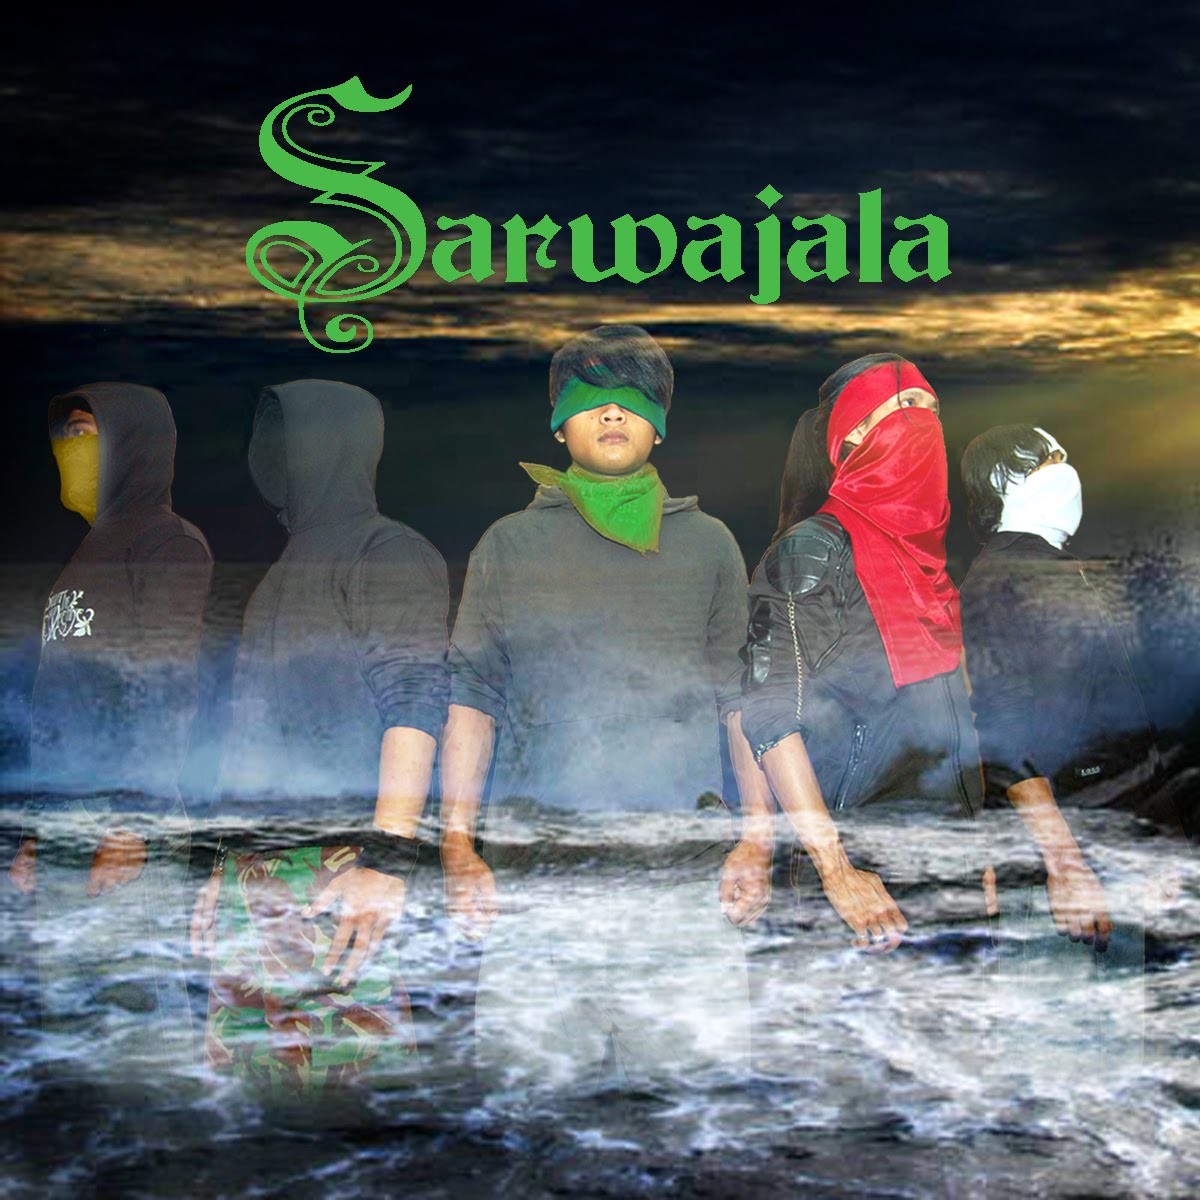 Sarwajala